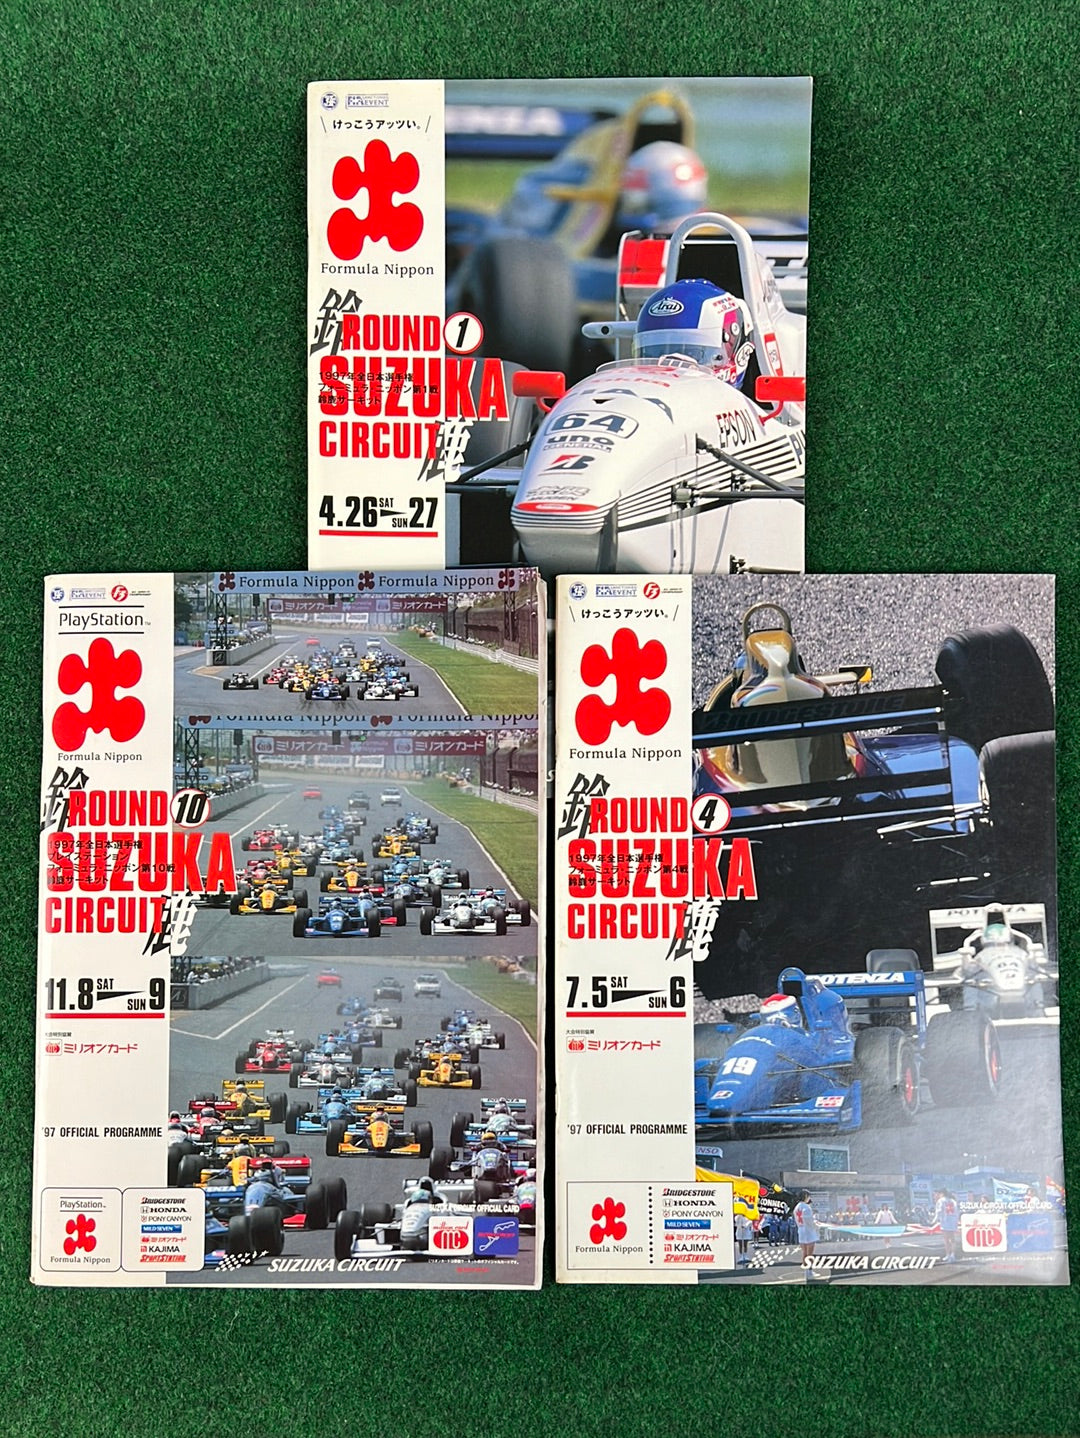 Formula Nippon - 1997 Suzuka Circuit Race Event Programs Set of 3